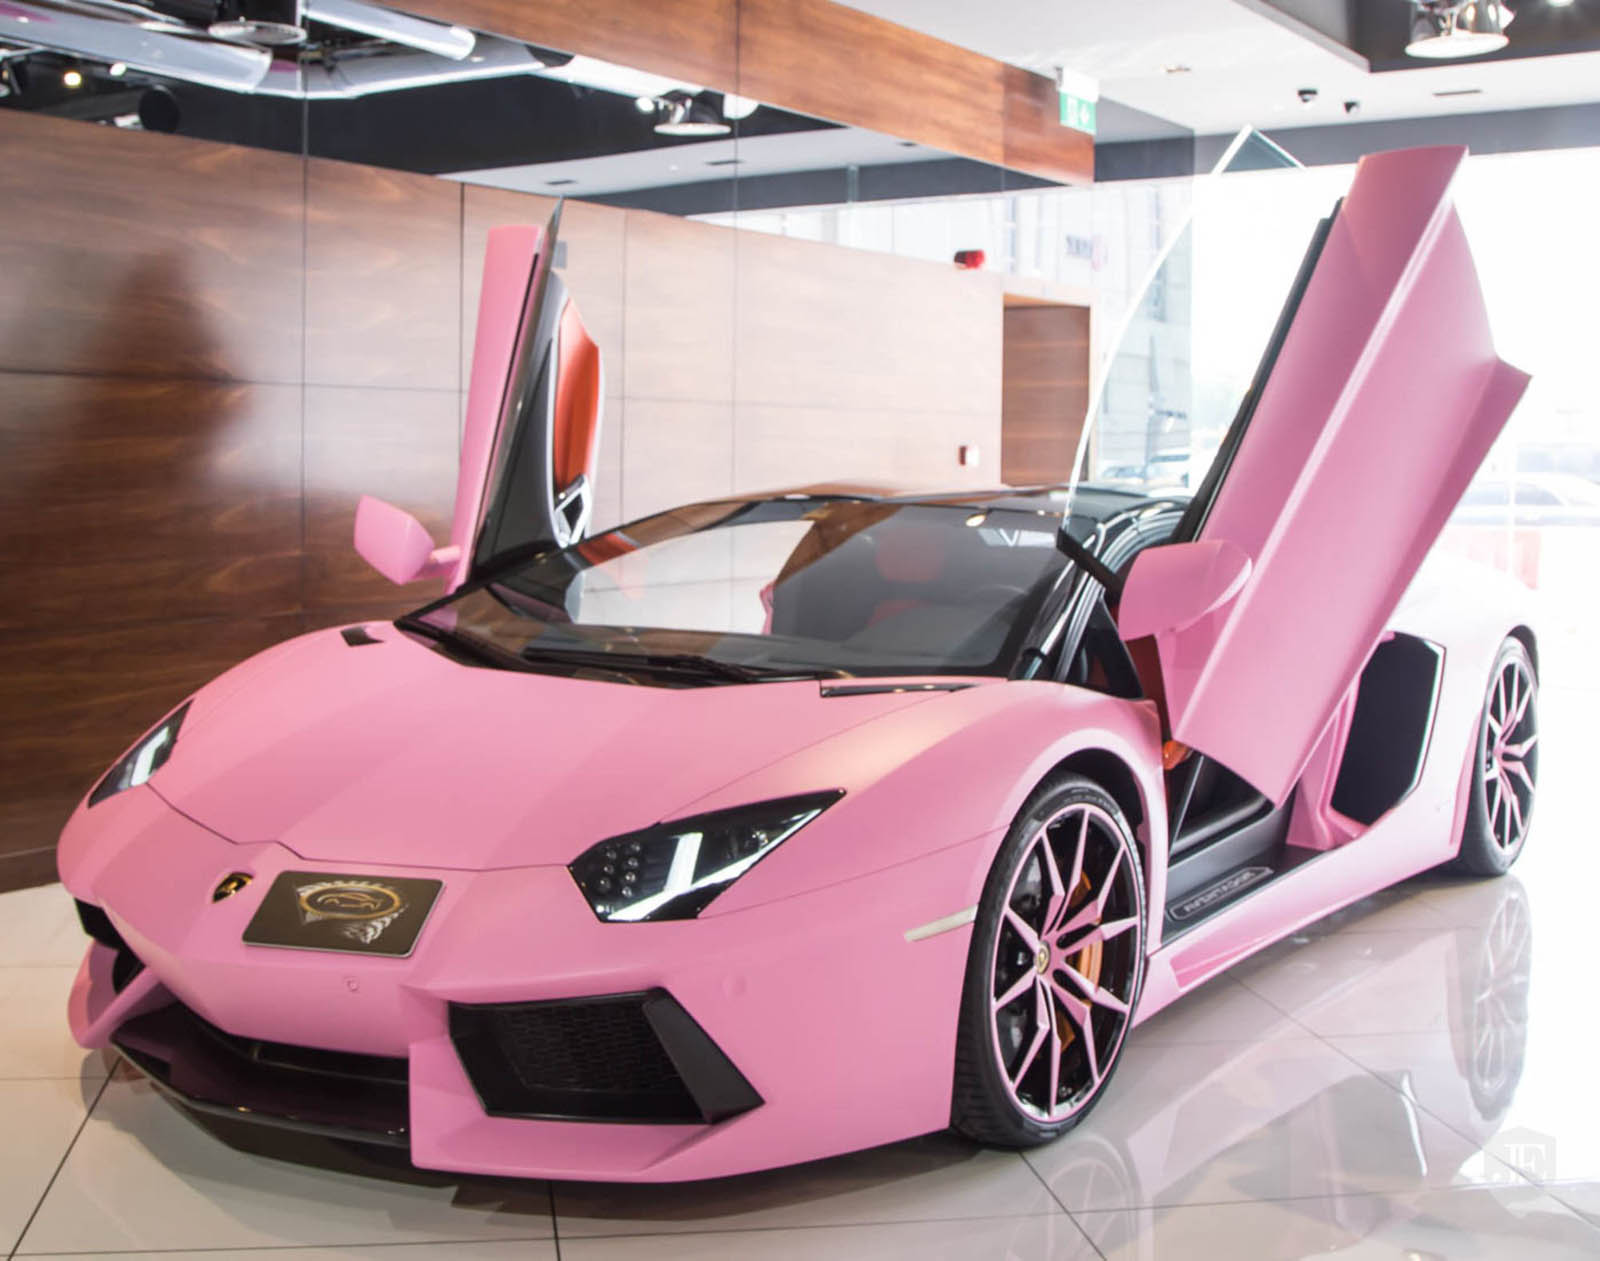 Lamborghini Aventador In Pepto Pink Over Orange Has Got To ...